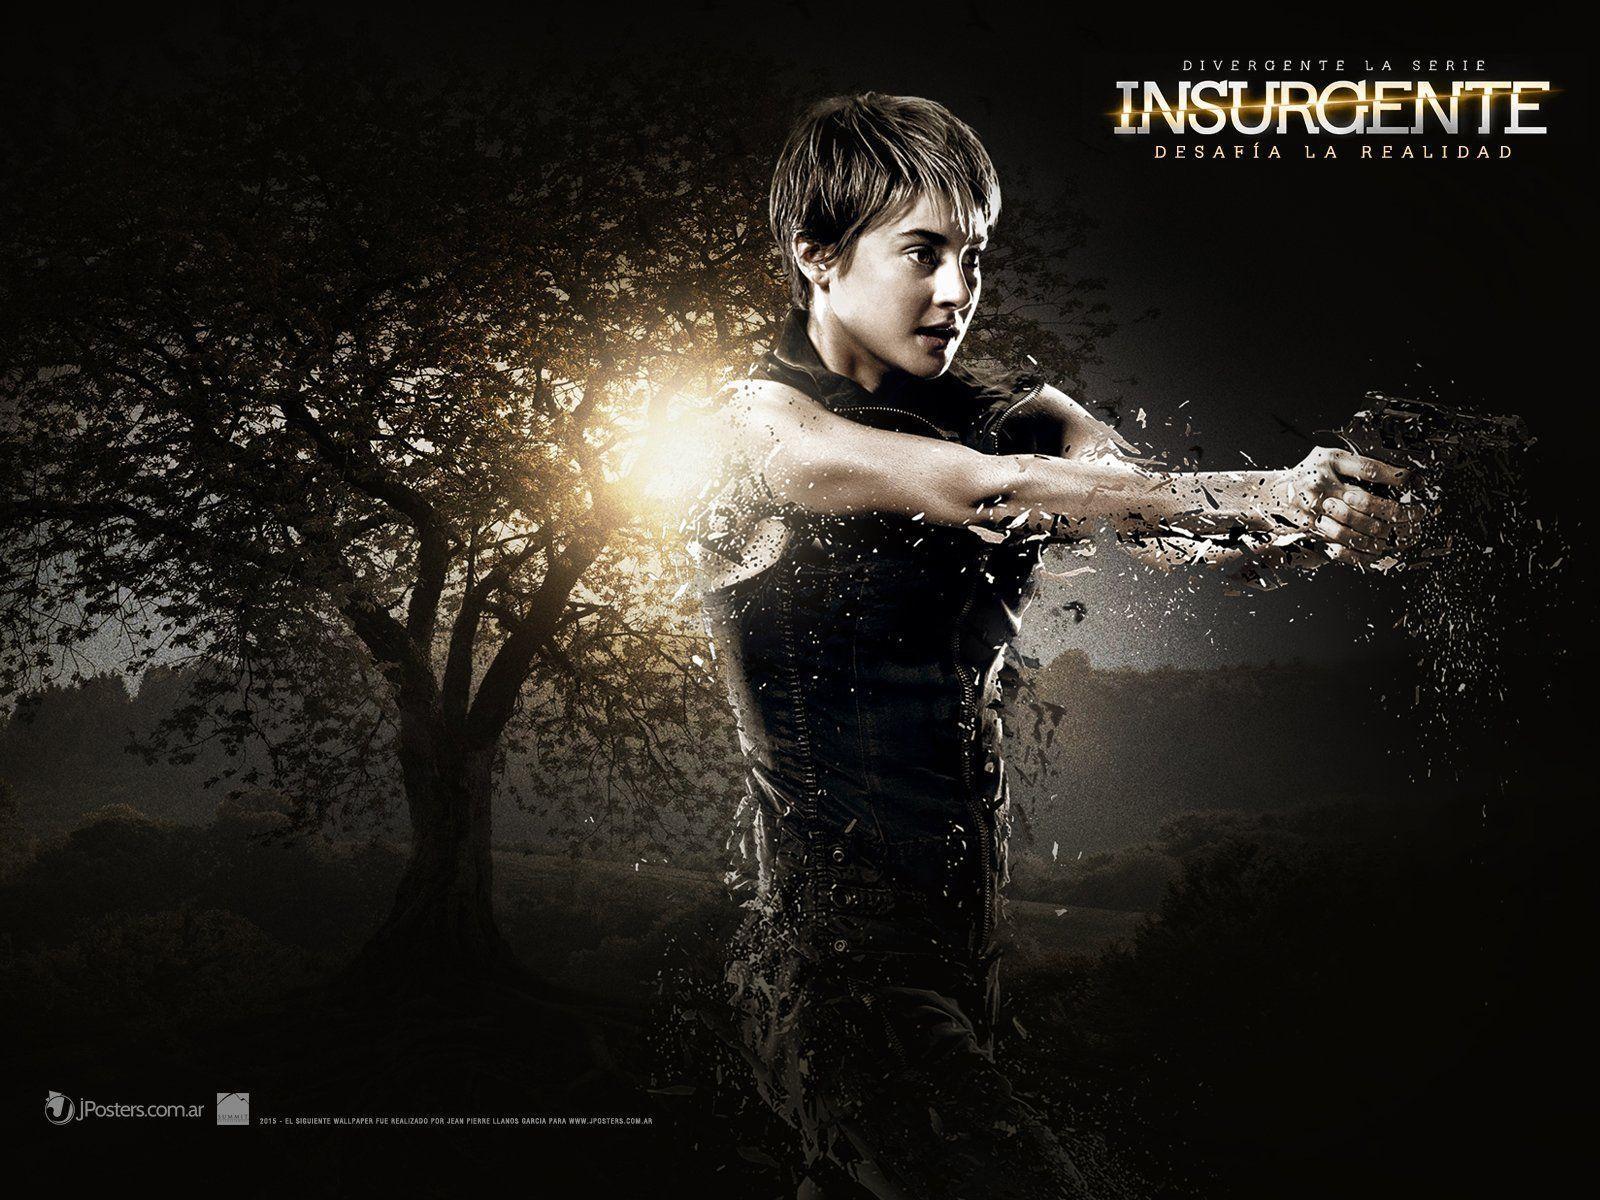 INSURGENT Sci Fi Adventure Action Divergent Series 1insurgent